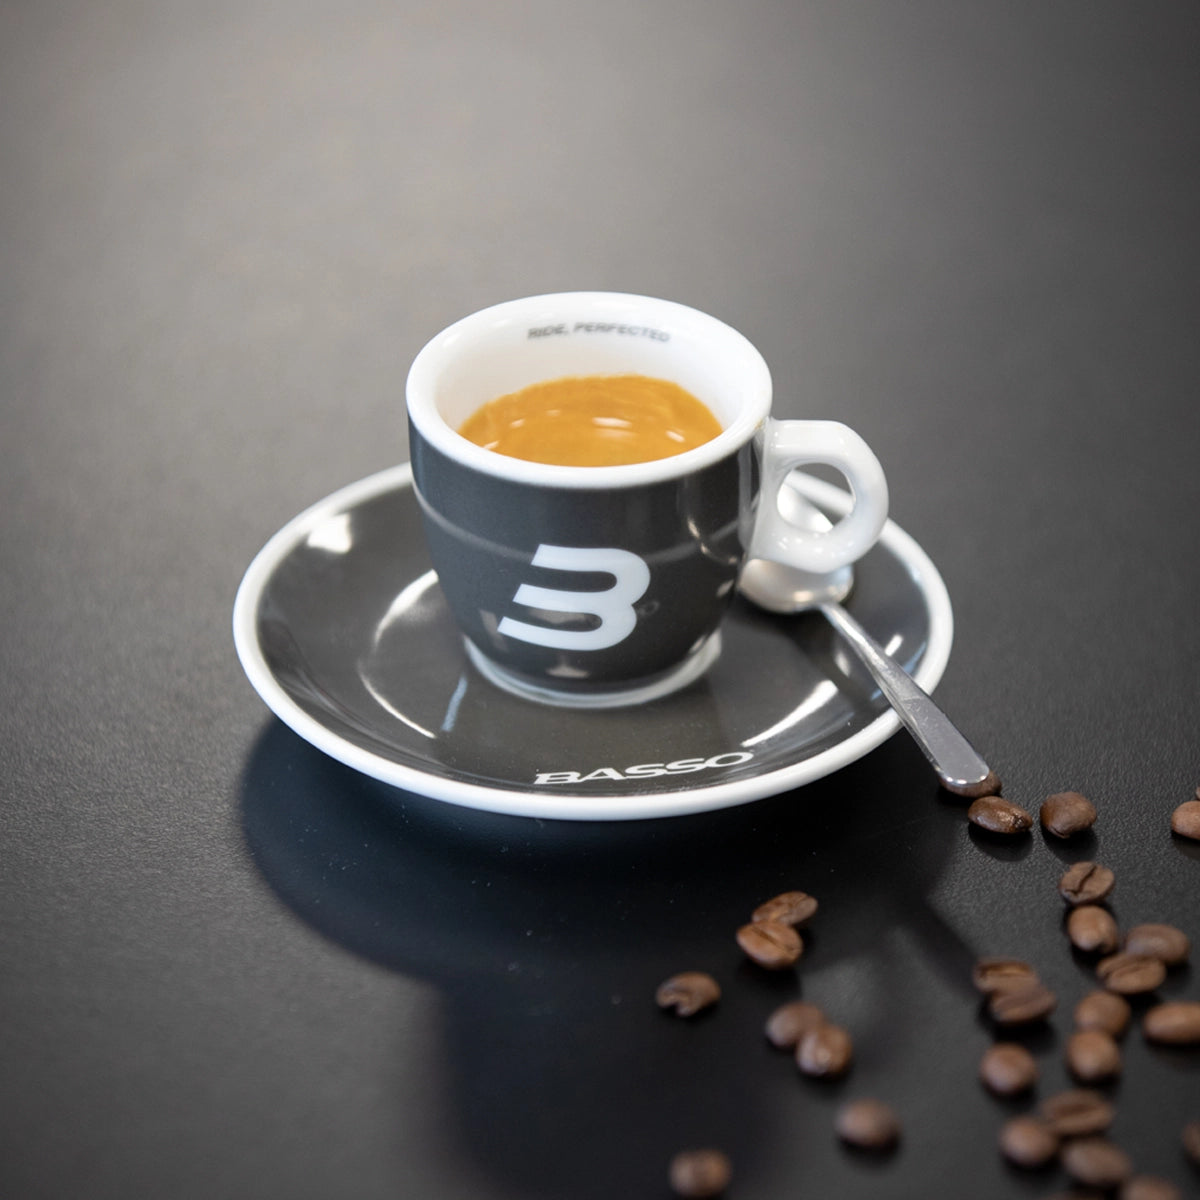 Campagnolo, Espresso Cups